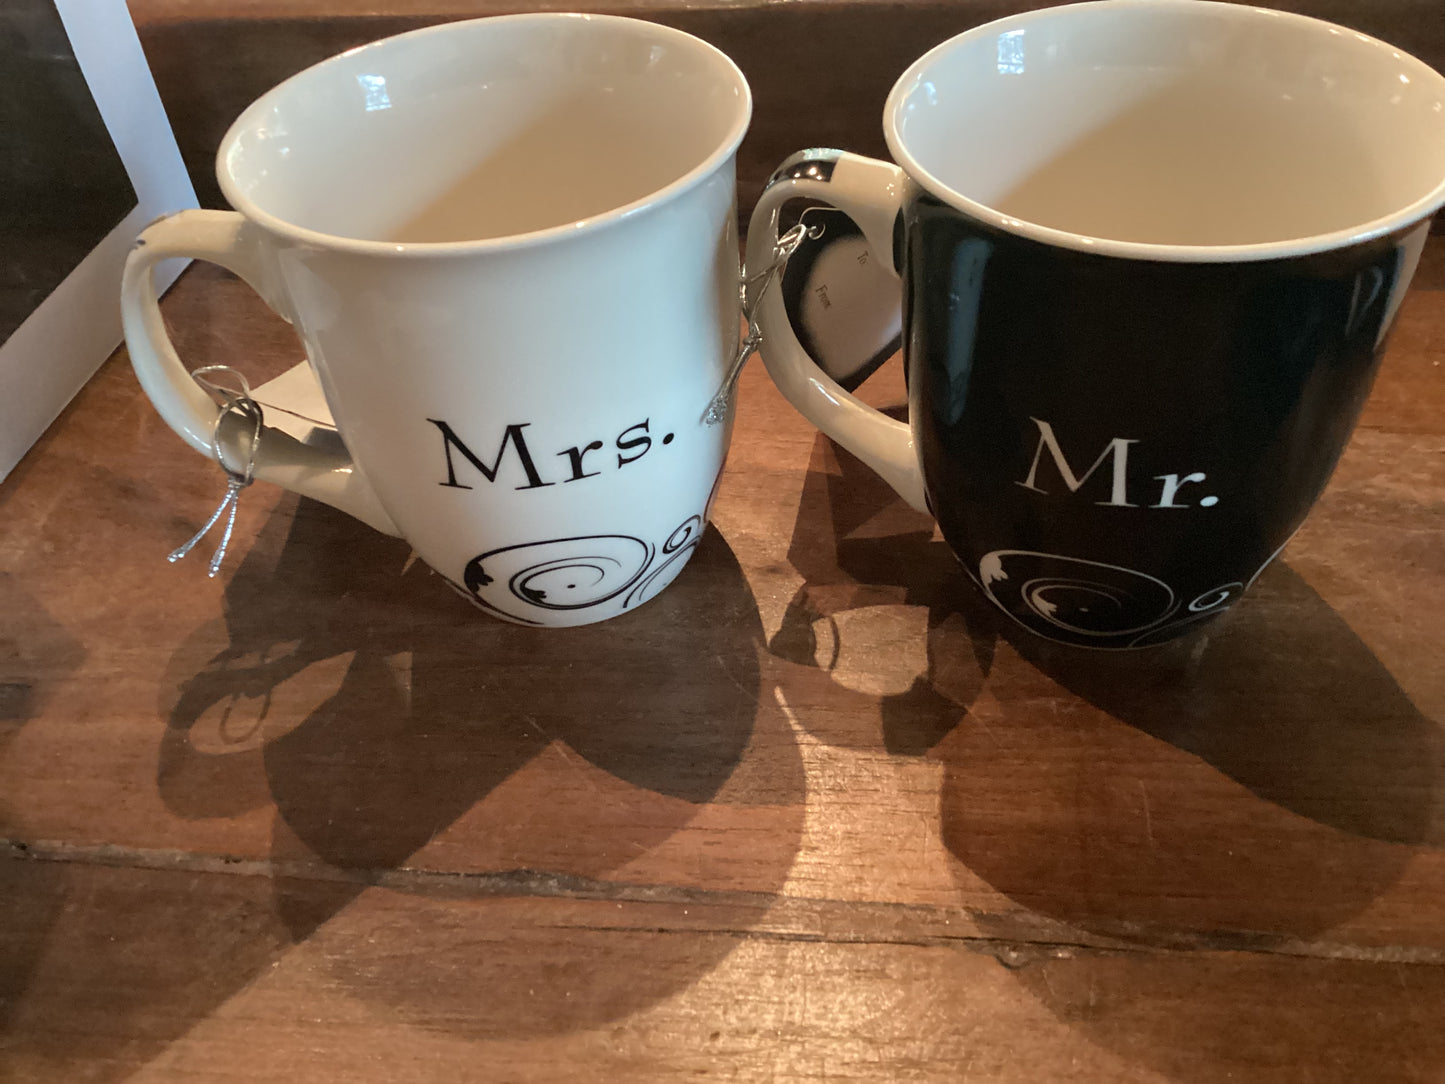 Mr and Mrs. Set of coffee ceramic mugs